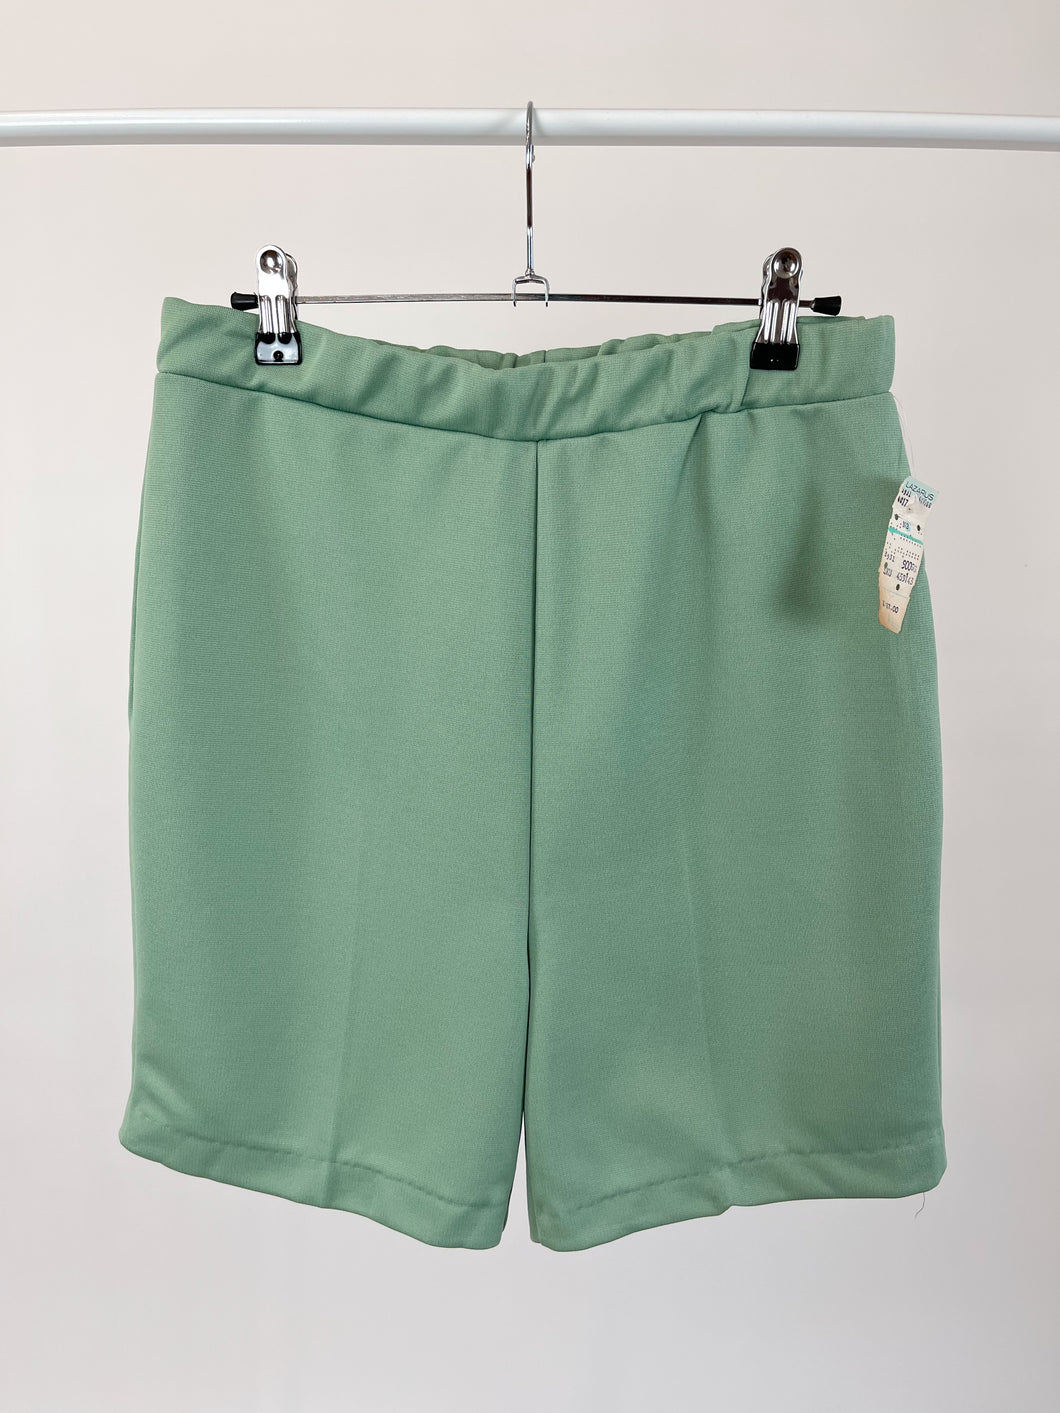 Vintage Green High Waist Pull-On Shorts (M/L)